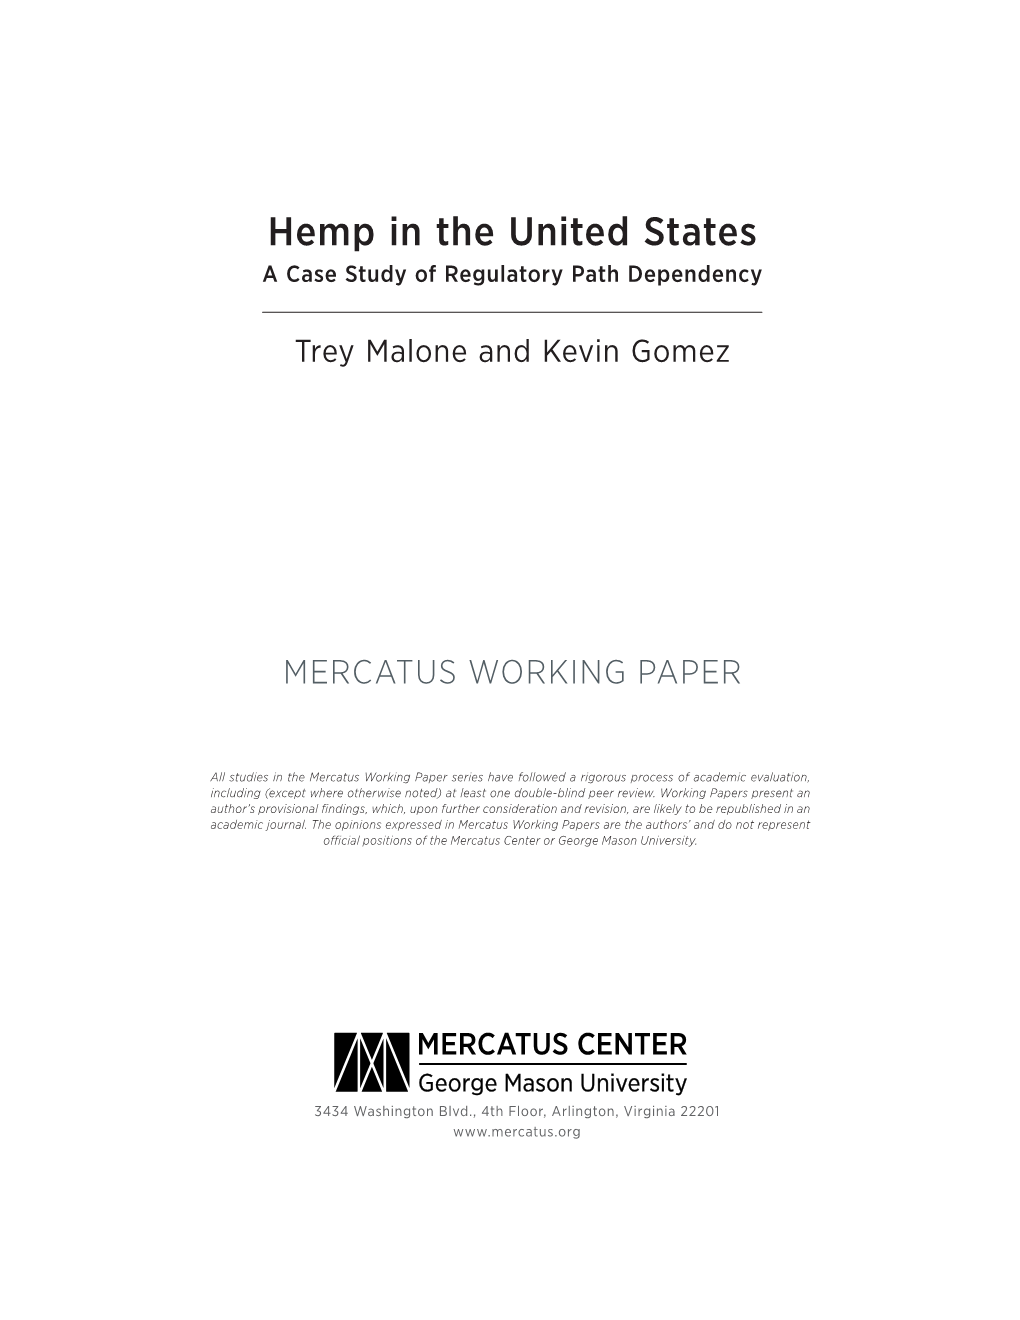 Hemp in the United States: a Case Study of Regulatory Path